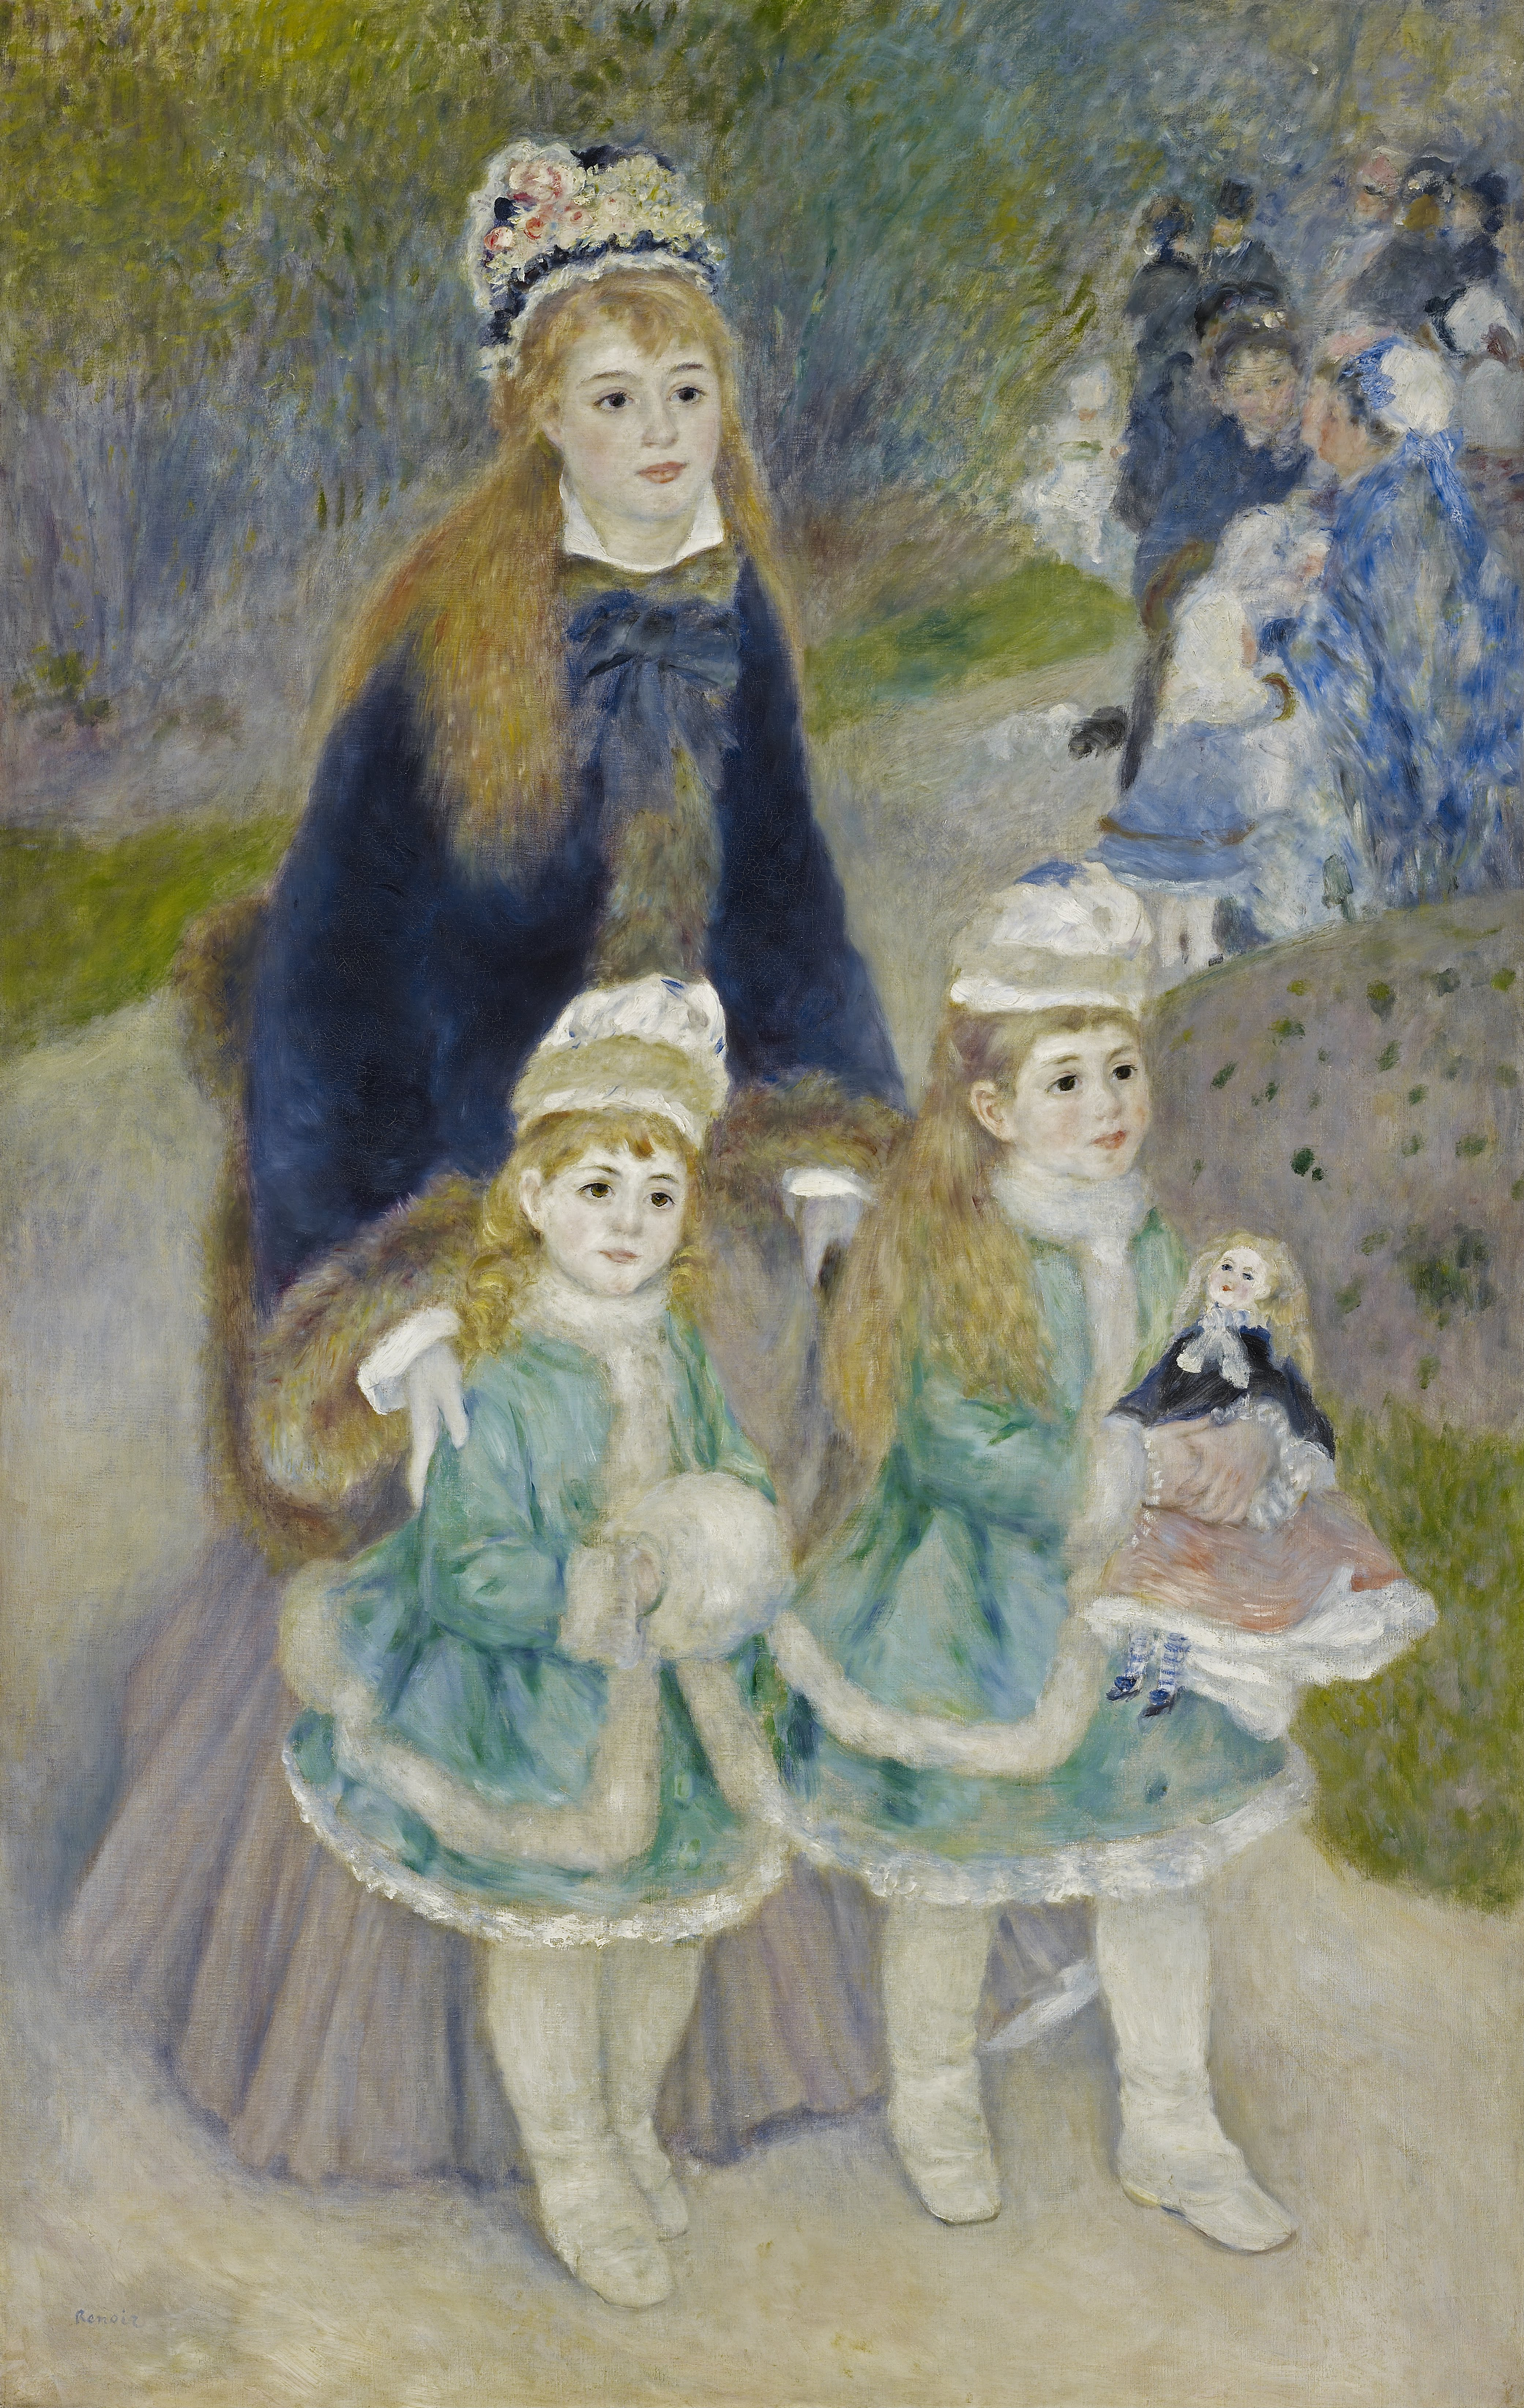 La Promenade by Pierre-Auguste Renoir - 1874-1876 - 170.2 x 108.3 cm 